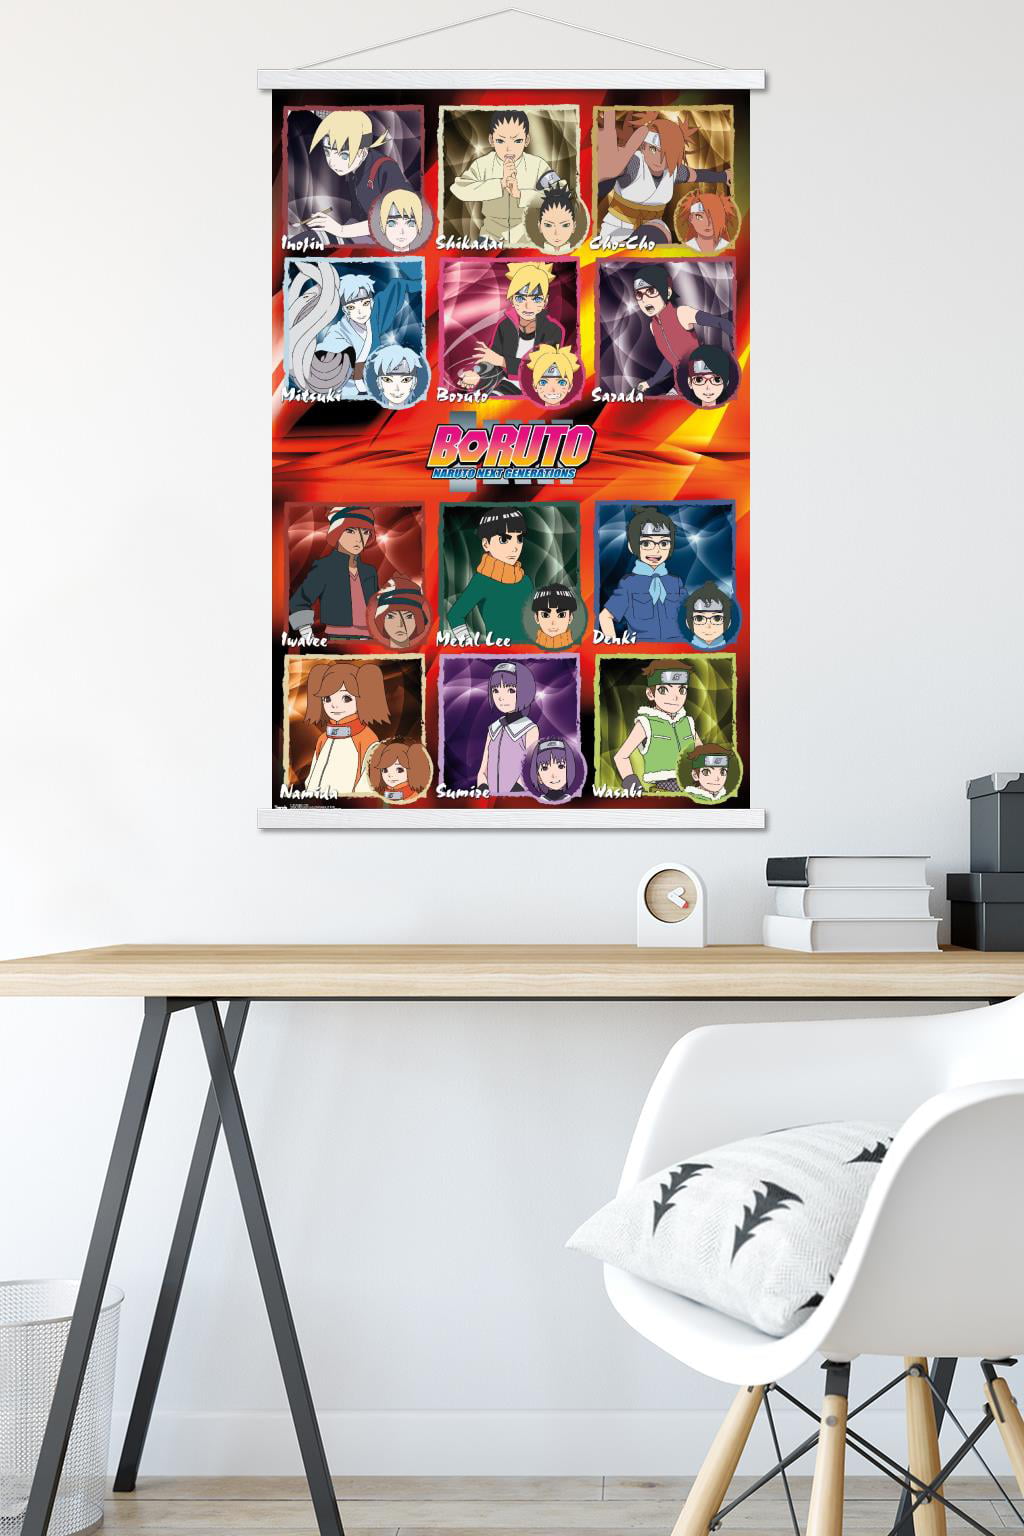 Boruto: Naruto Next Generations - Falling Wall Poster, 22.375 x 34 